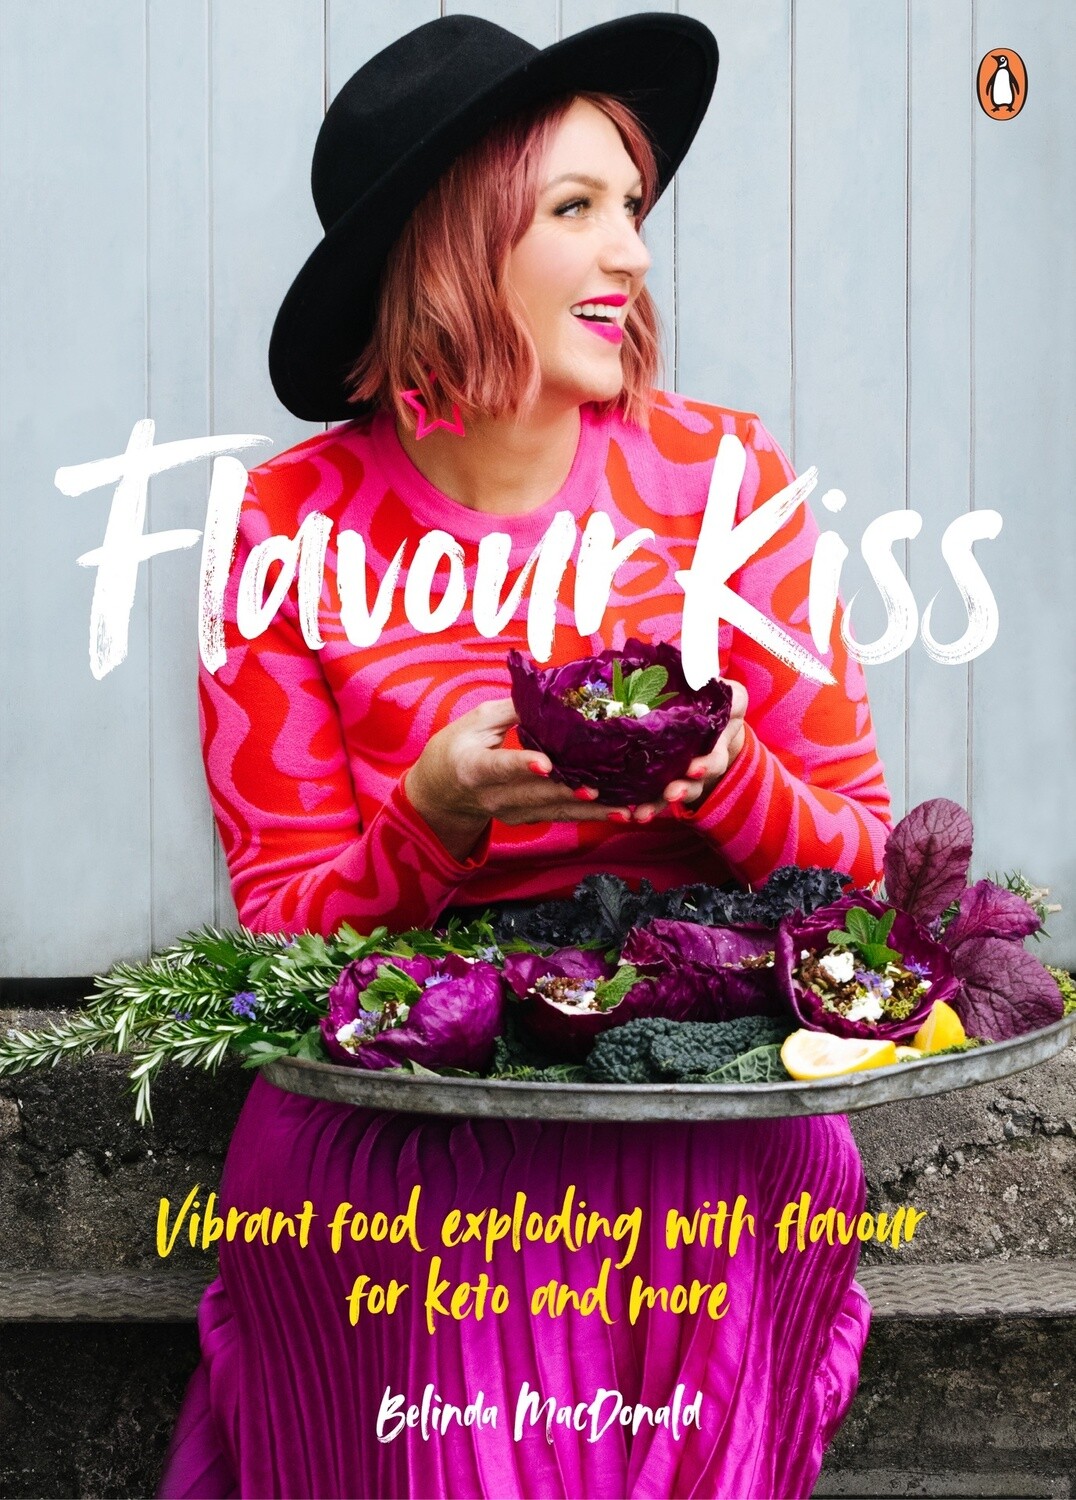 Flavour Kiss by Belinda MacDonald